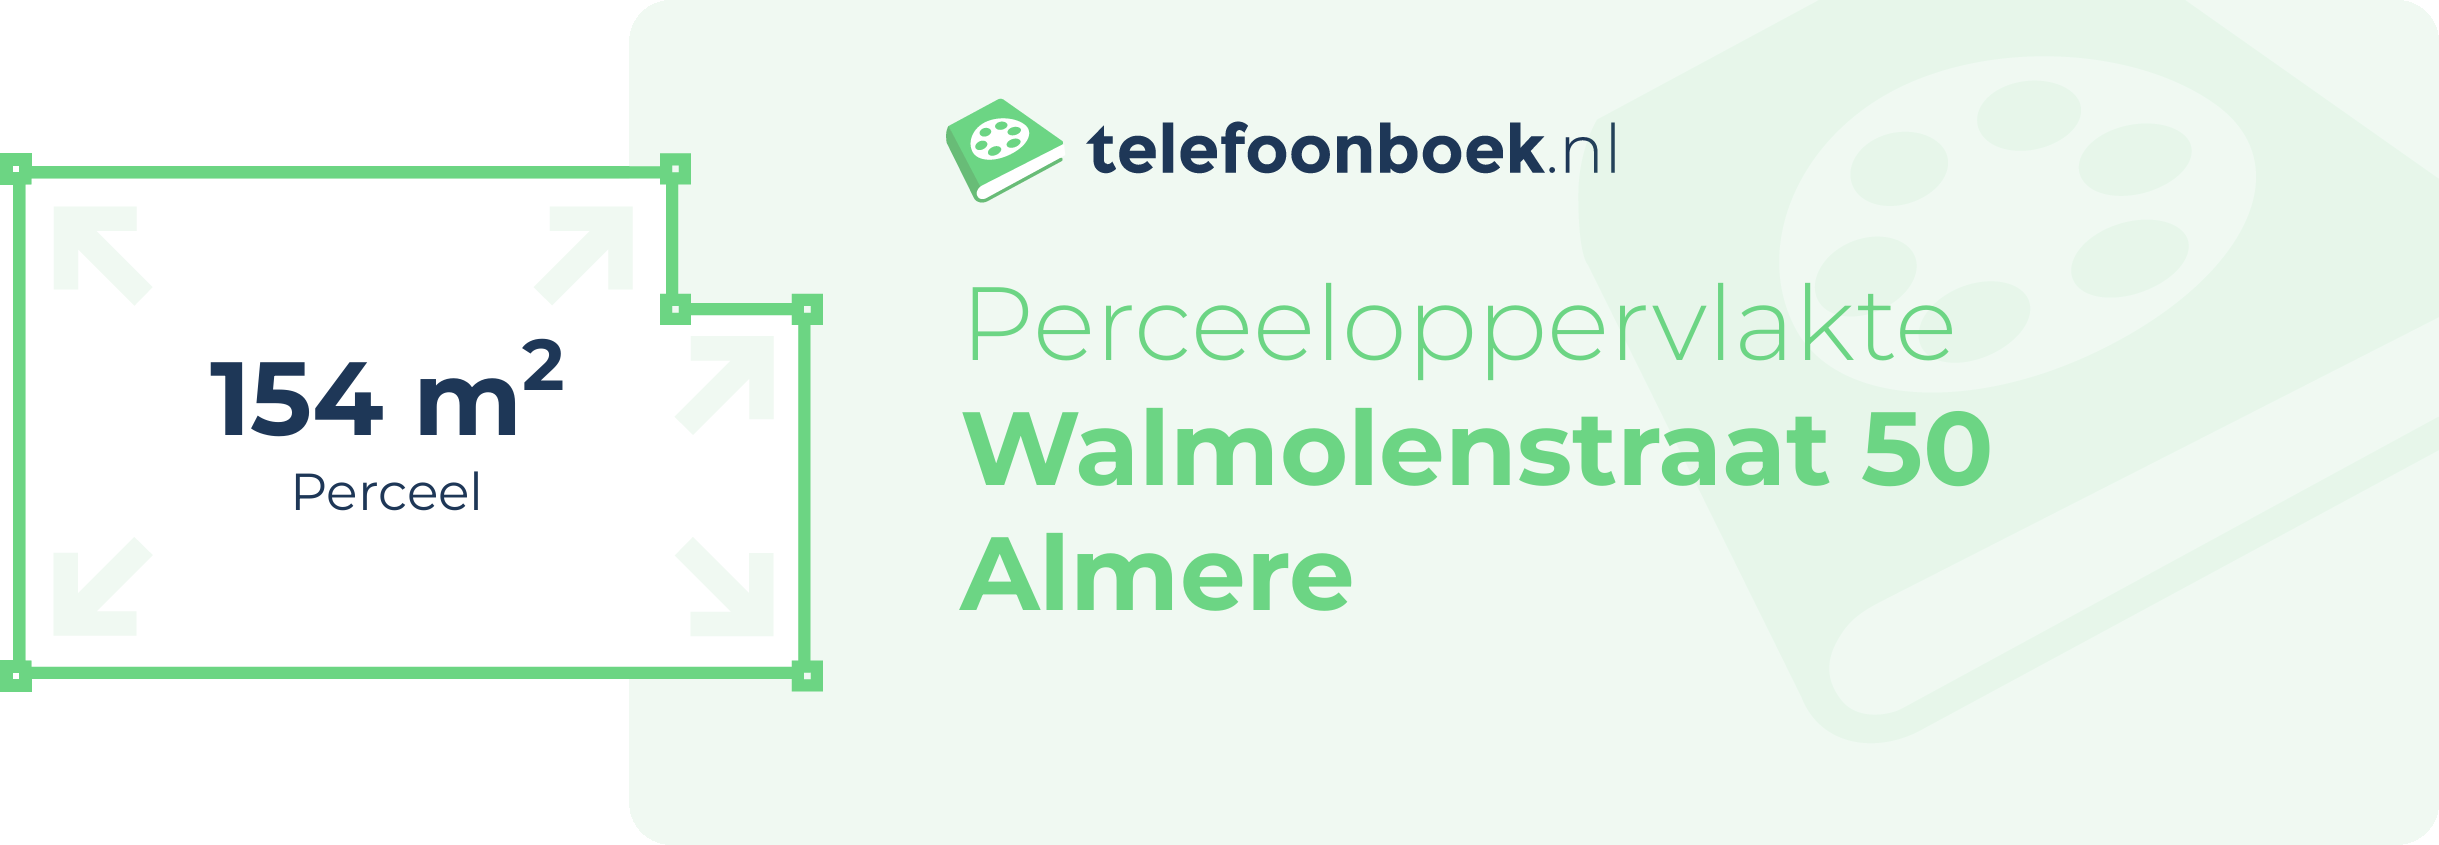 Perceeloppervlakte Walmolenstraat 50 Almere